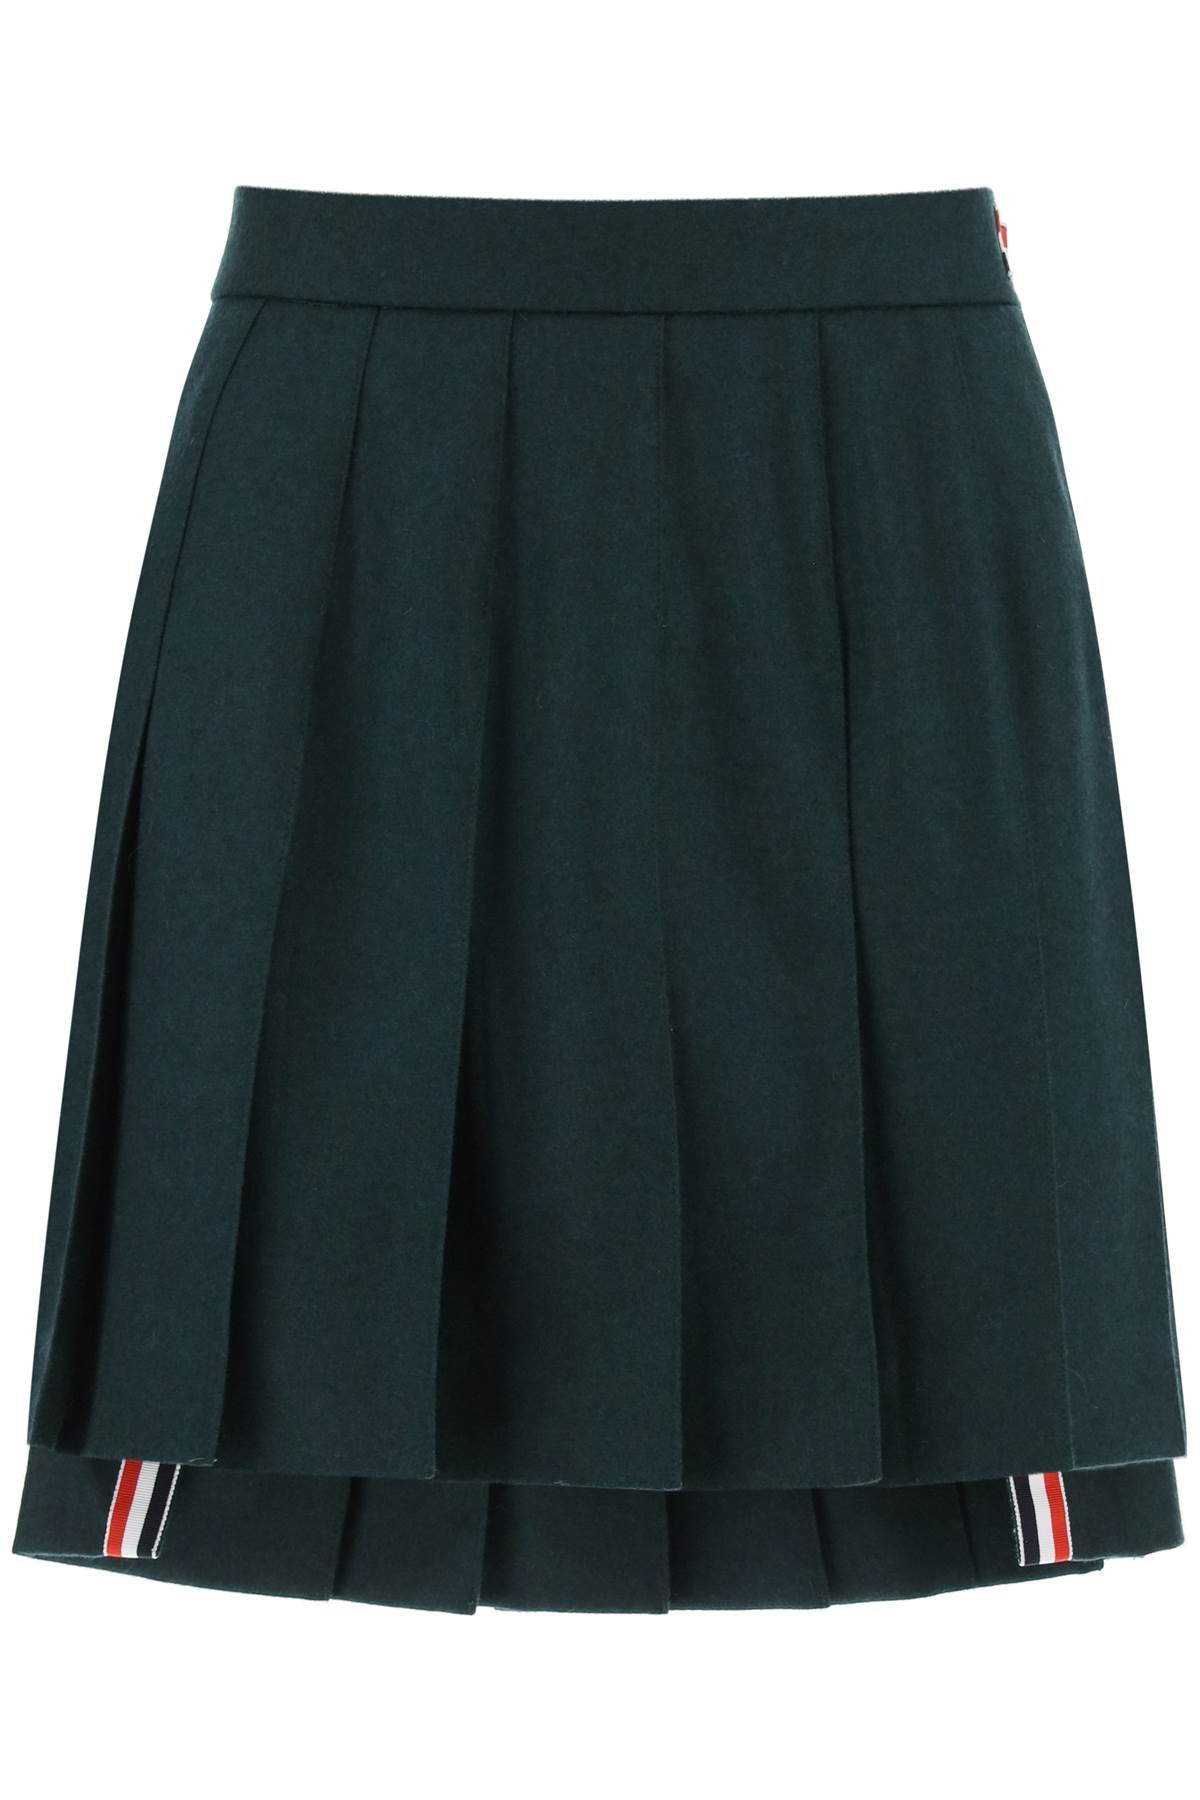 Thom Browne Thom browne flannel mini pleated skirt